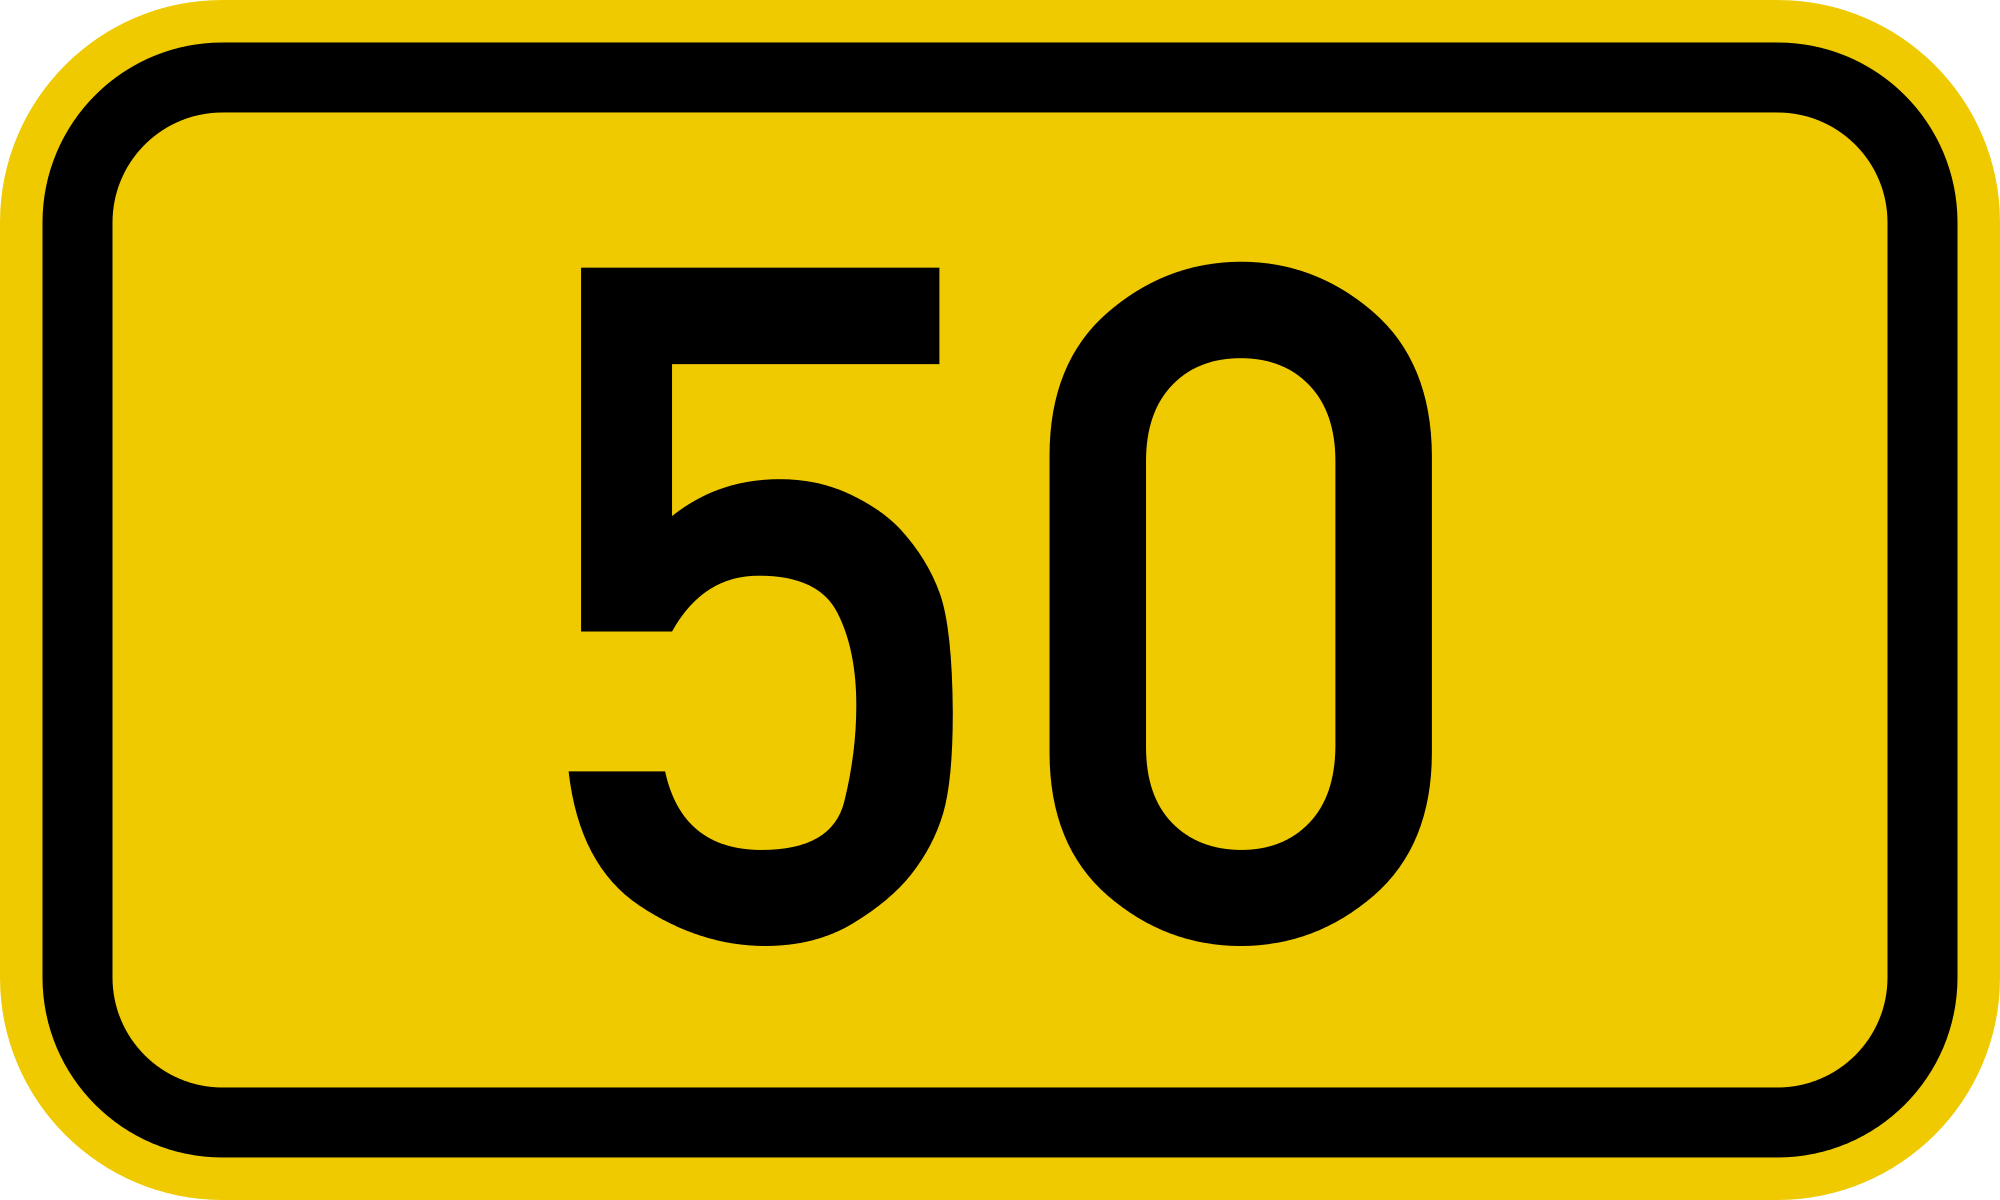 50 Number PNG pngteam.com